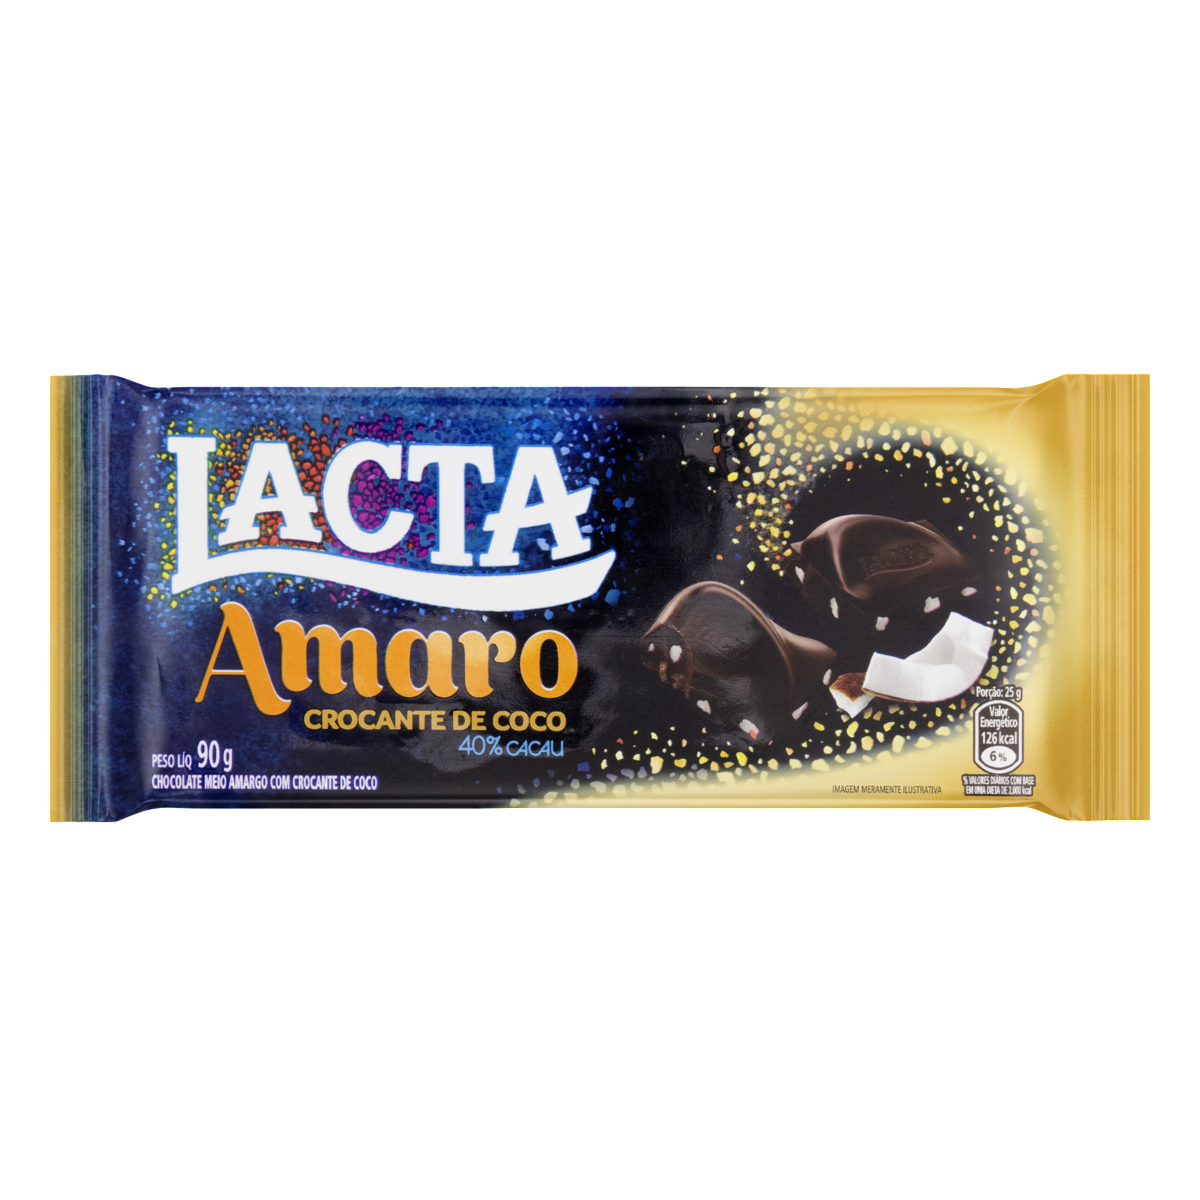 7622210961969 - CHOCOLATE MEIO AMARGO 40% CACAU CROCANTE DE COCO LACTA AMARO PACOTE 90G